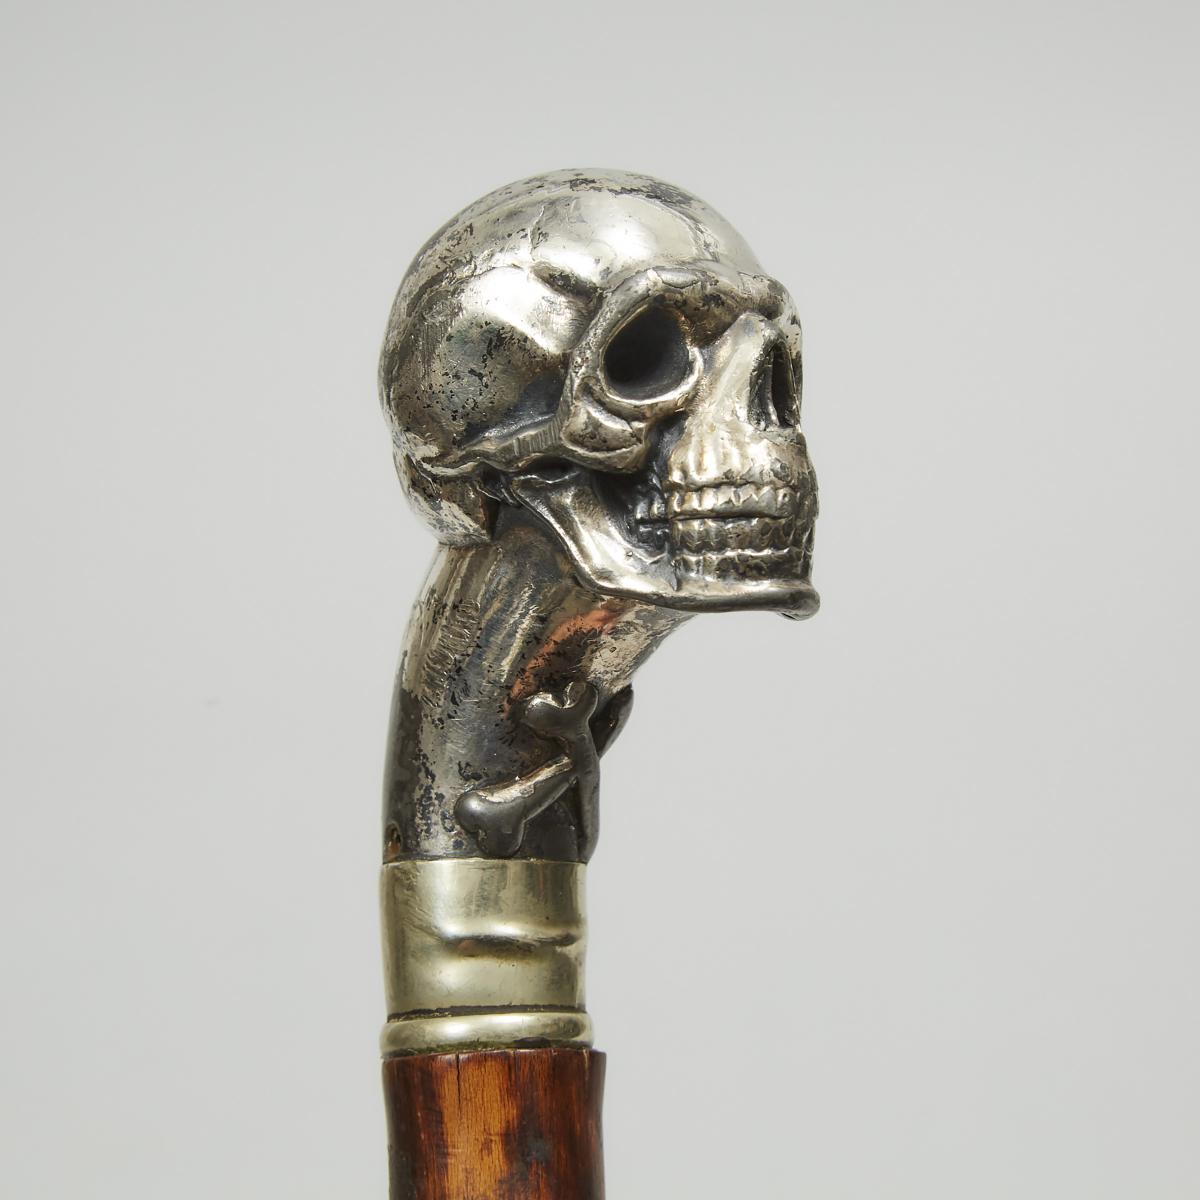 Victorian Memento Mori Skull and Crossbones Handled Walking Stick, c.1890, diameter 34 in — 86.4 cm - Image 2 of 4